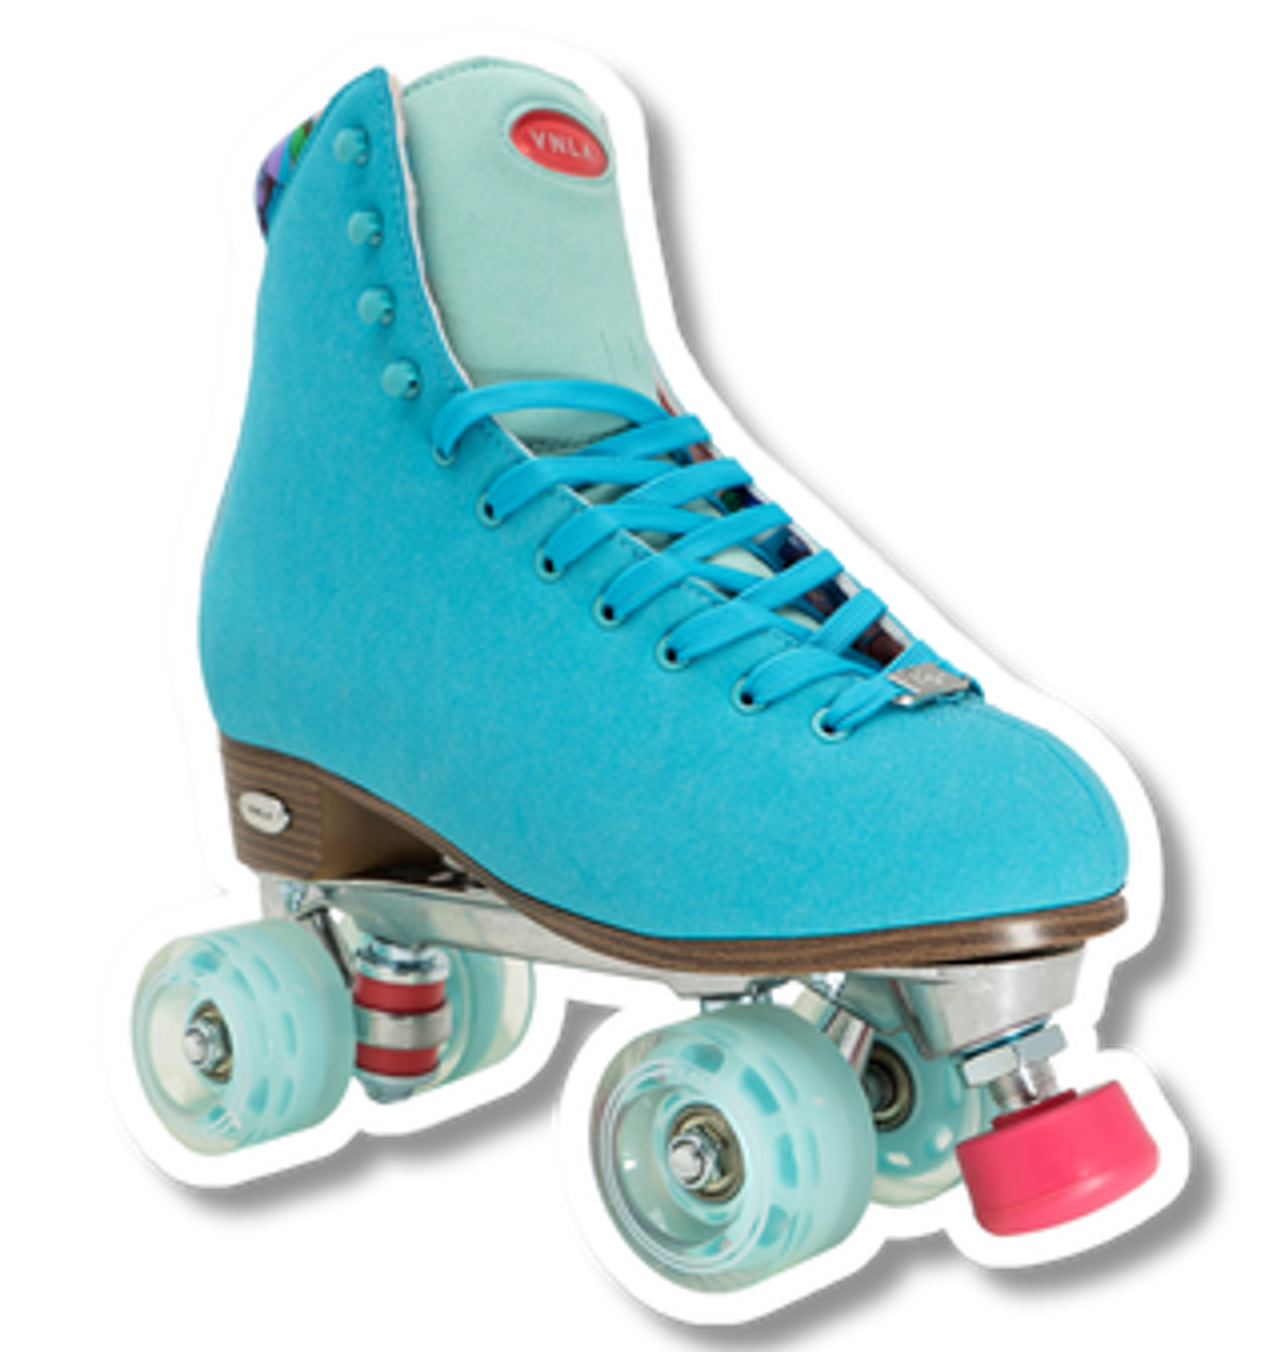 Outdoor Roller Skates For Adults Street Roller Skates